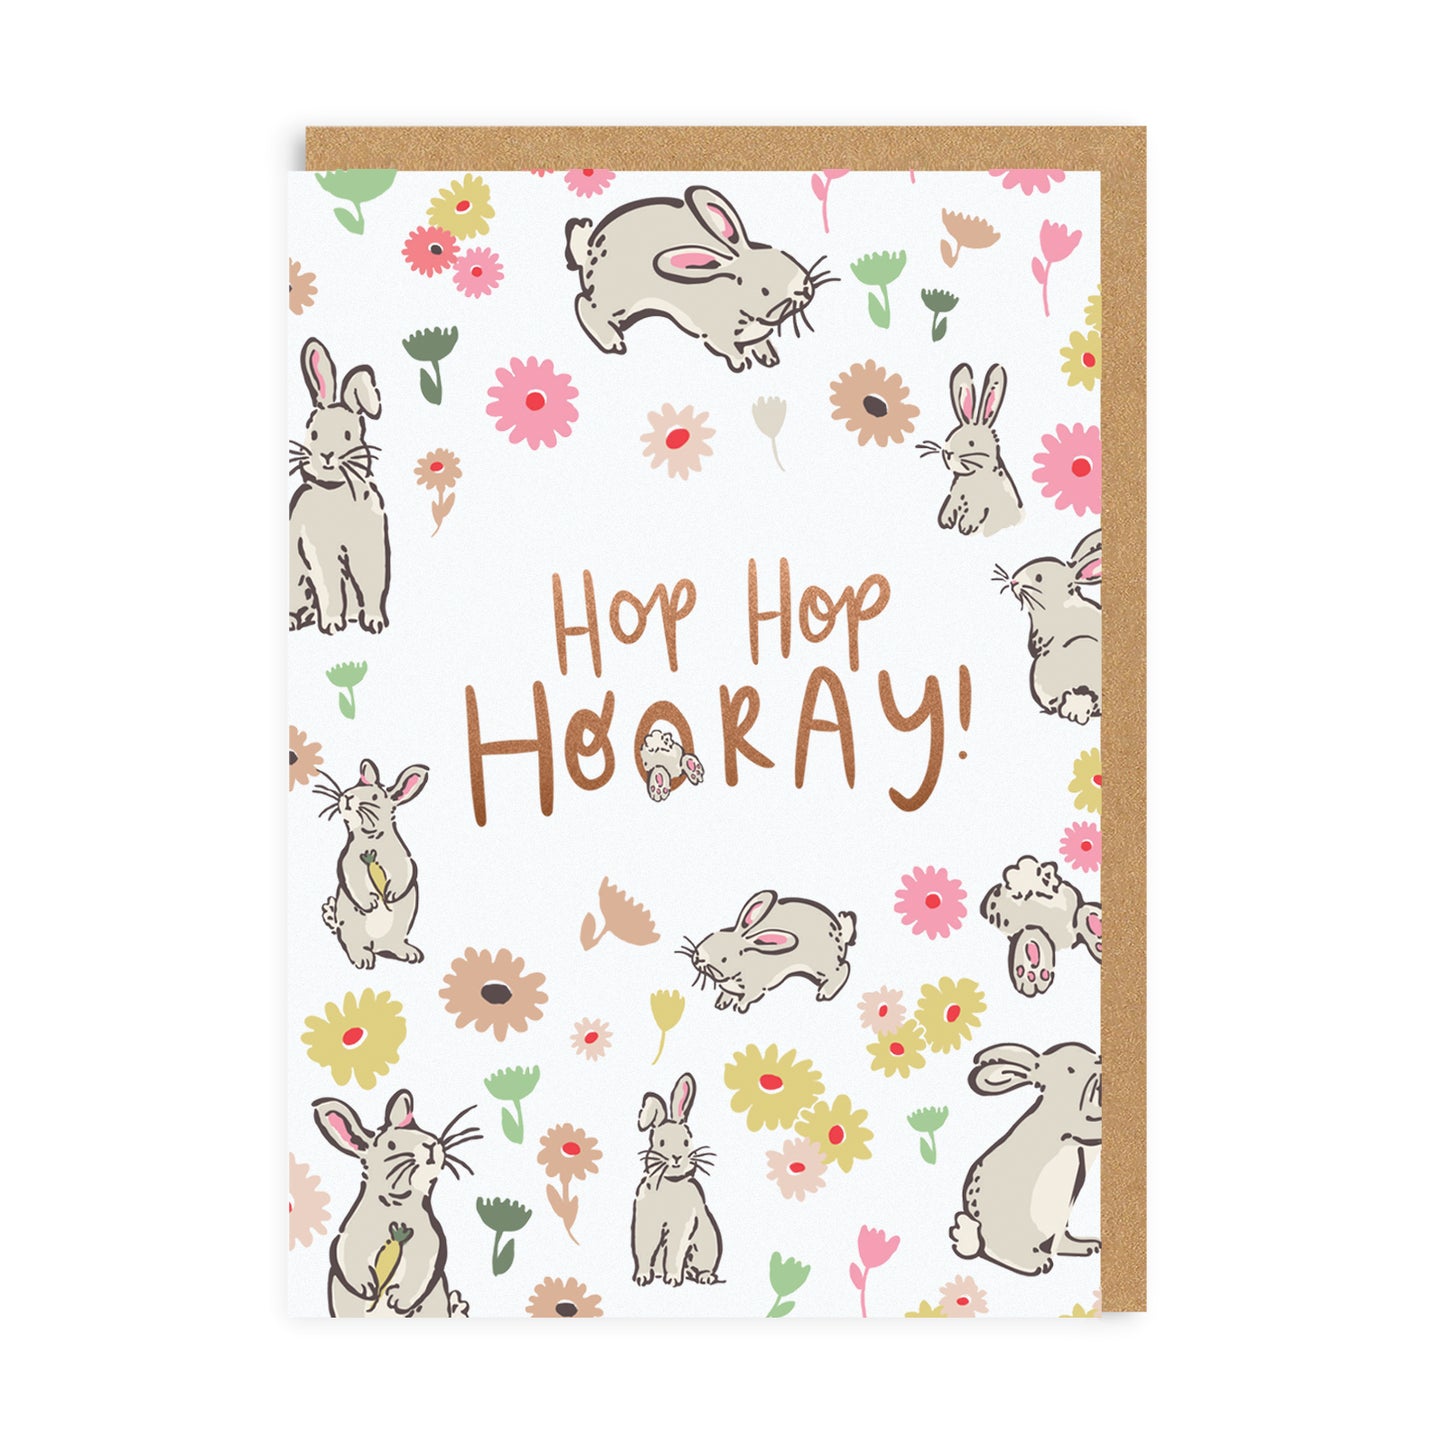 Hop, Hop, Hooray! Bunny A6+ Greeting Card